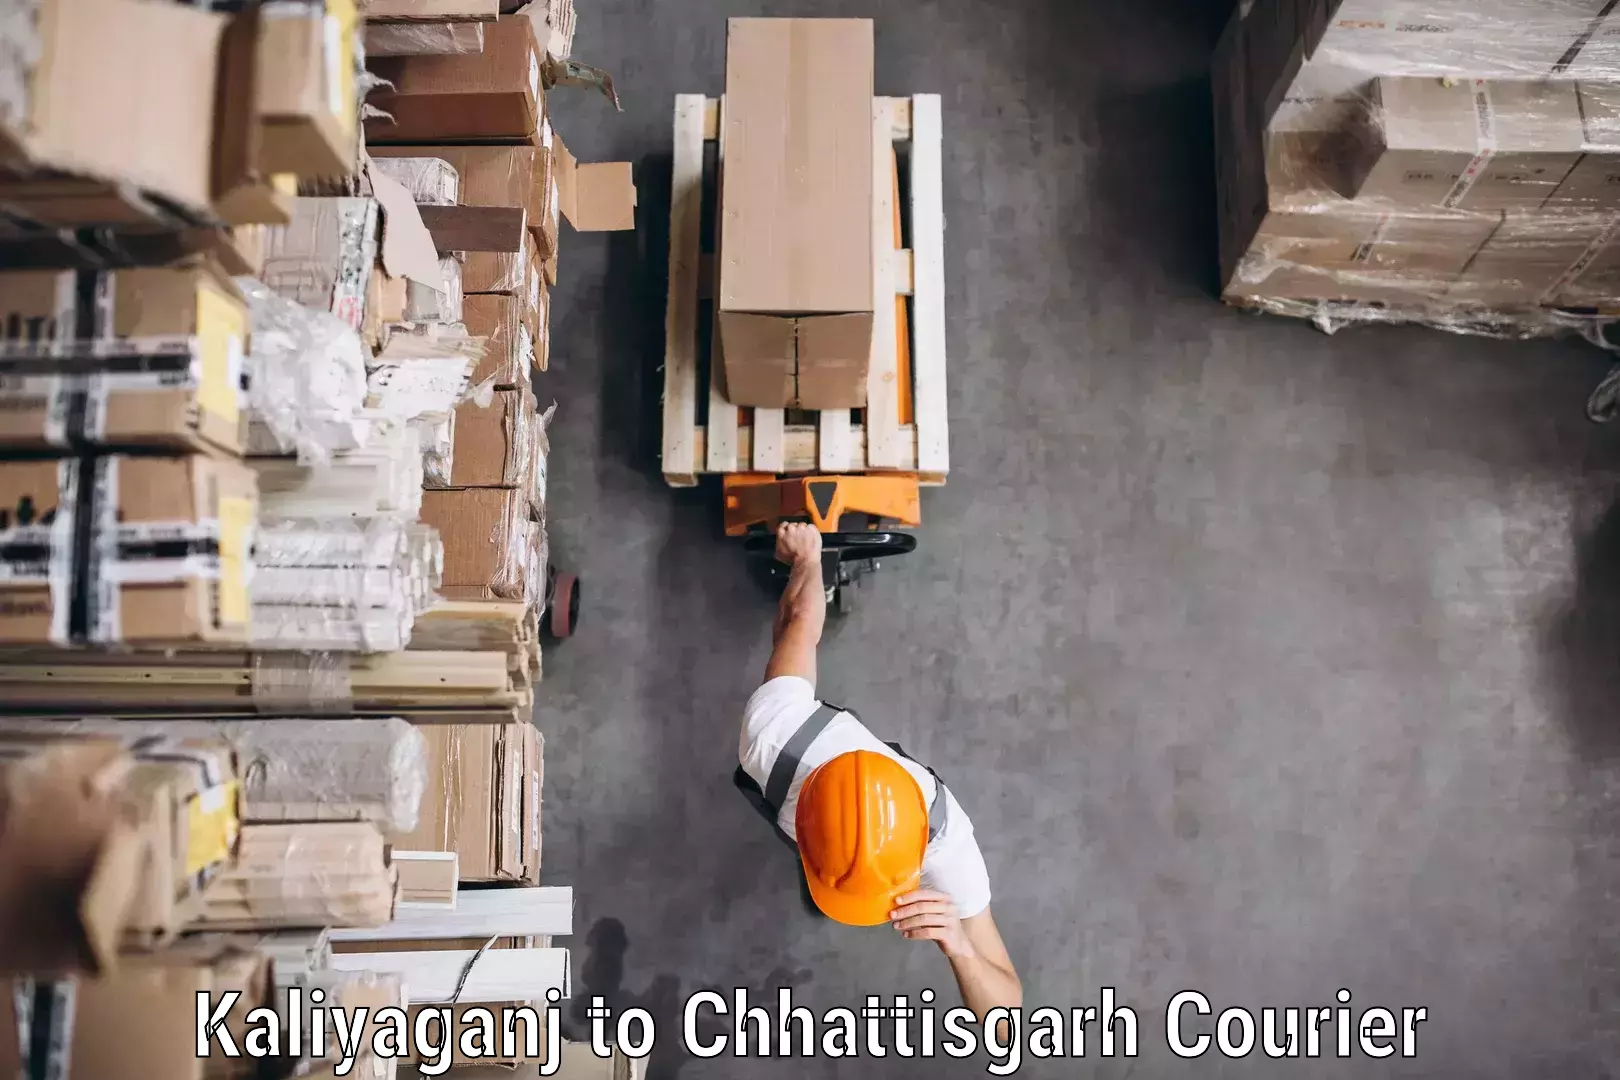 Courier service innovation Kaliyaganj to Chhattisgarh